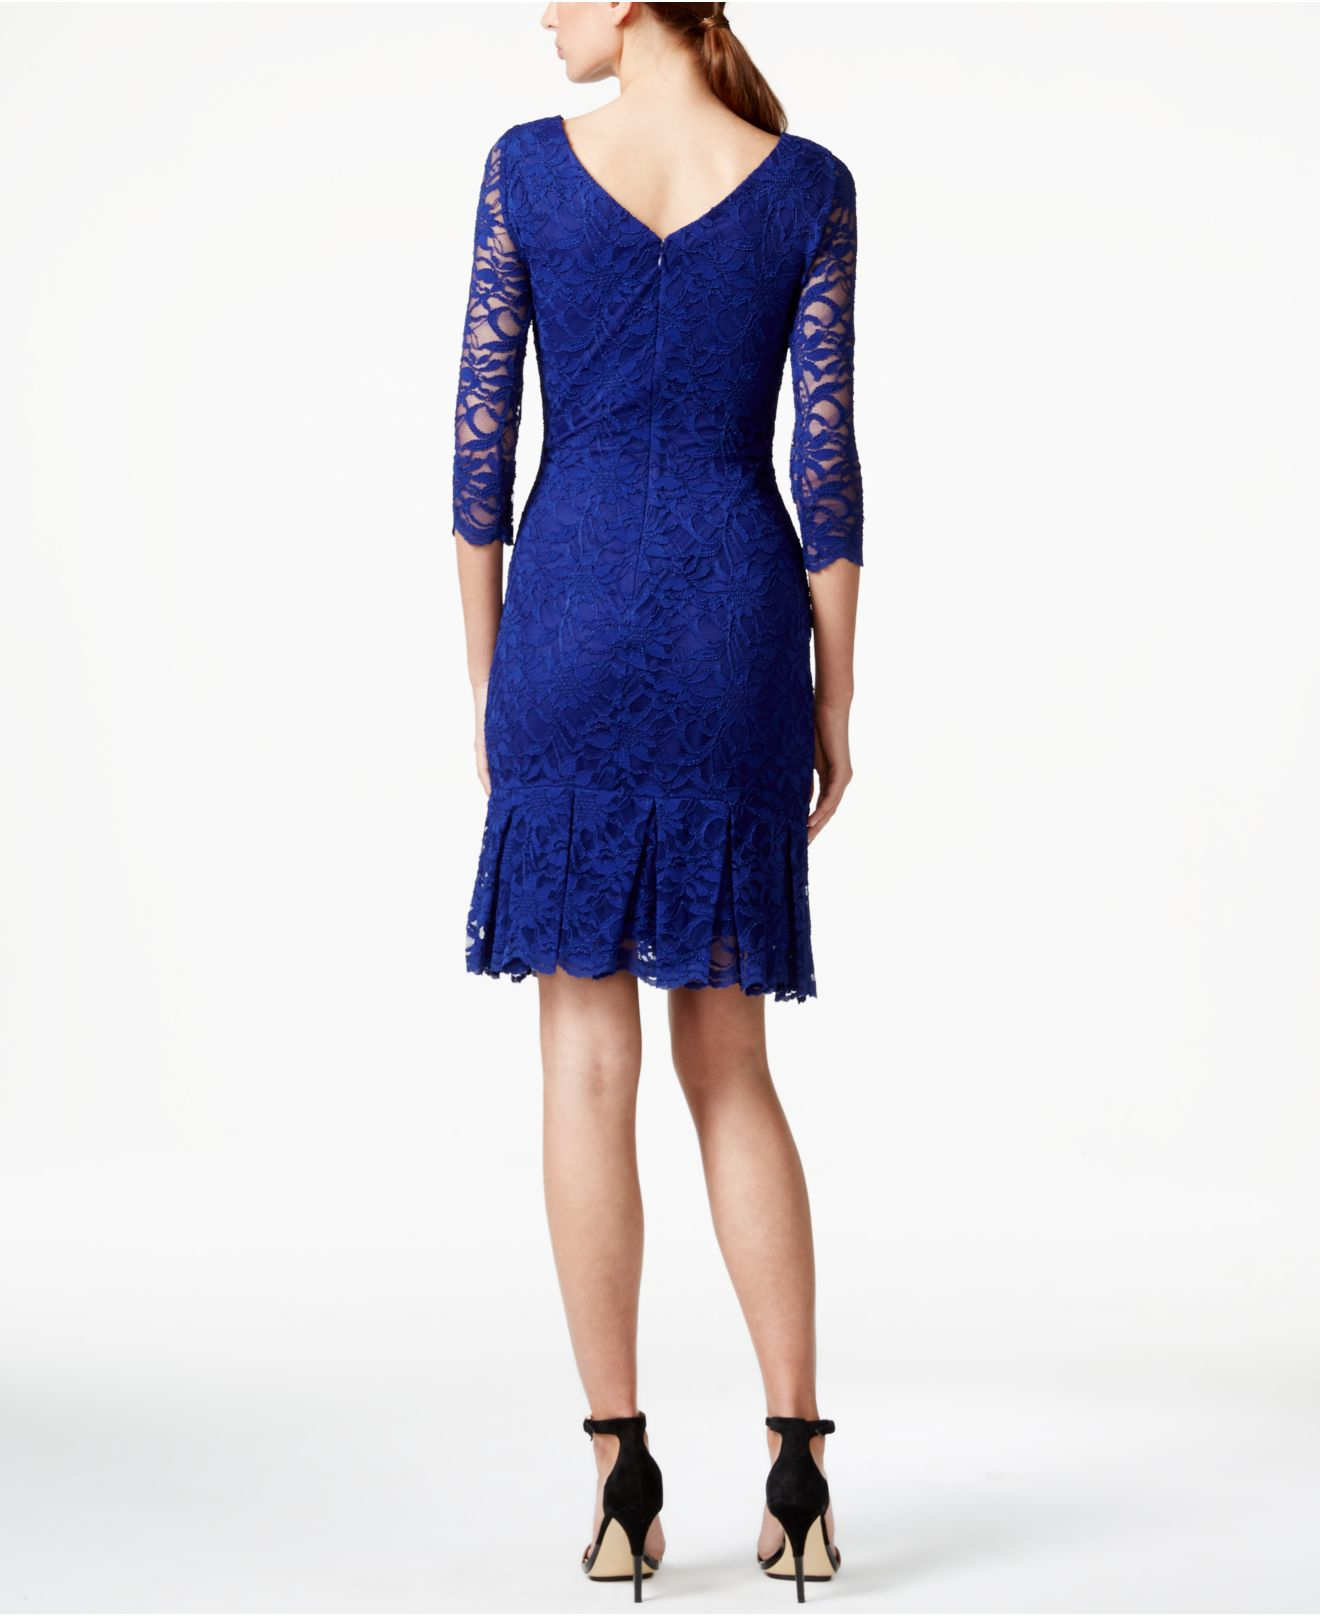 Lyst - Calvin Klein Floral Lace Sheath Dress in Blue